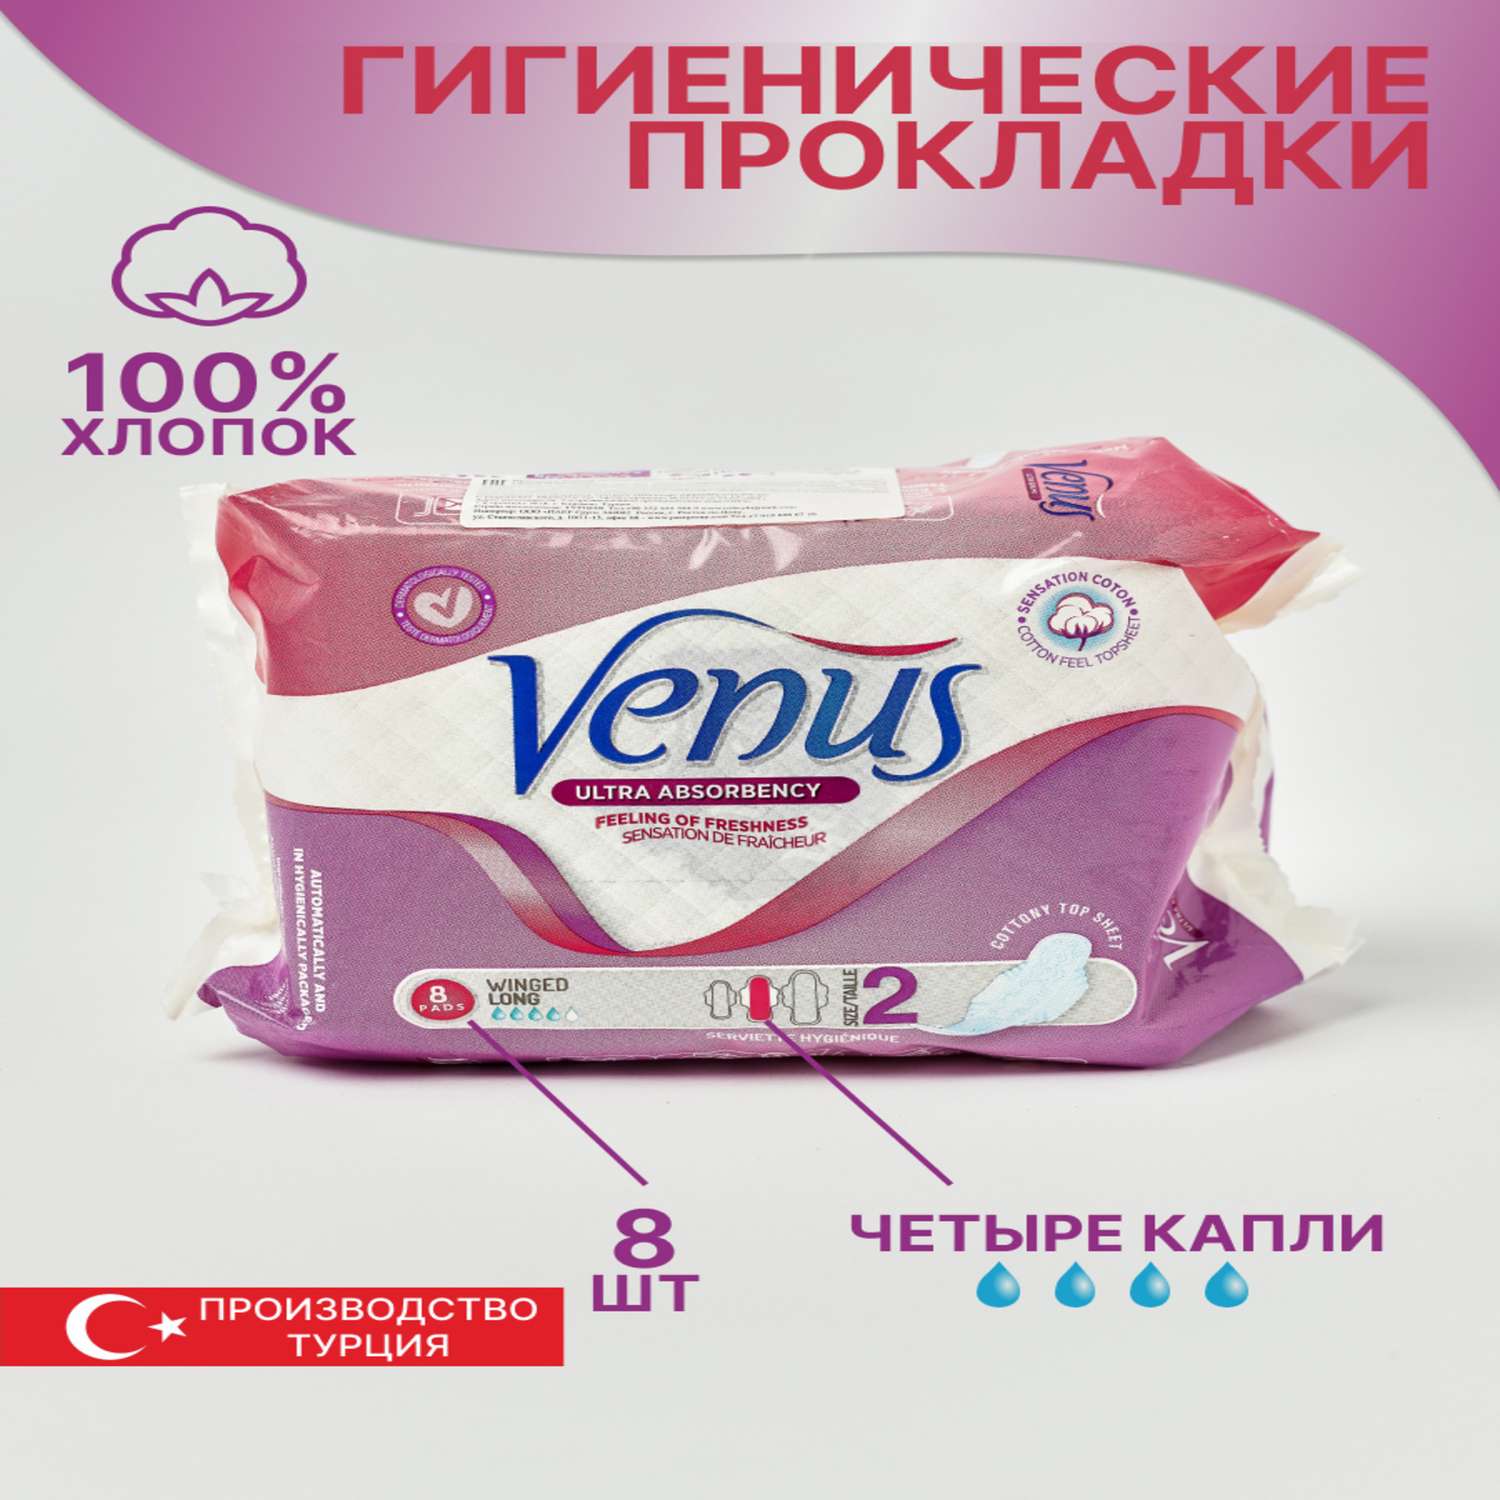 Прокладки Venus Ultra absorbency Long 8 шт - фото 2